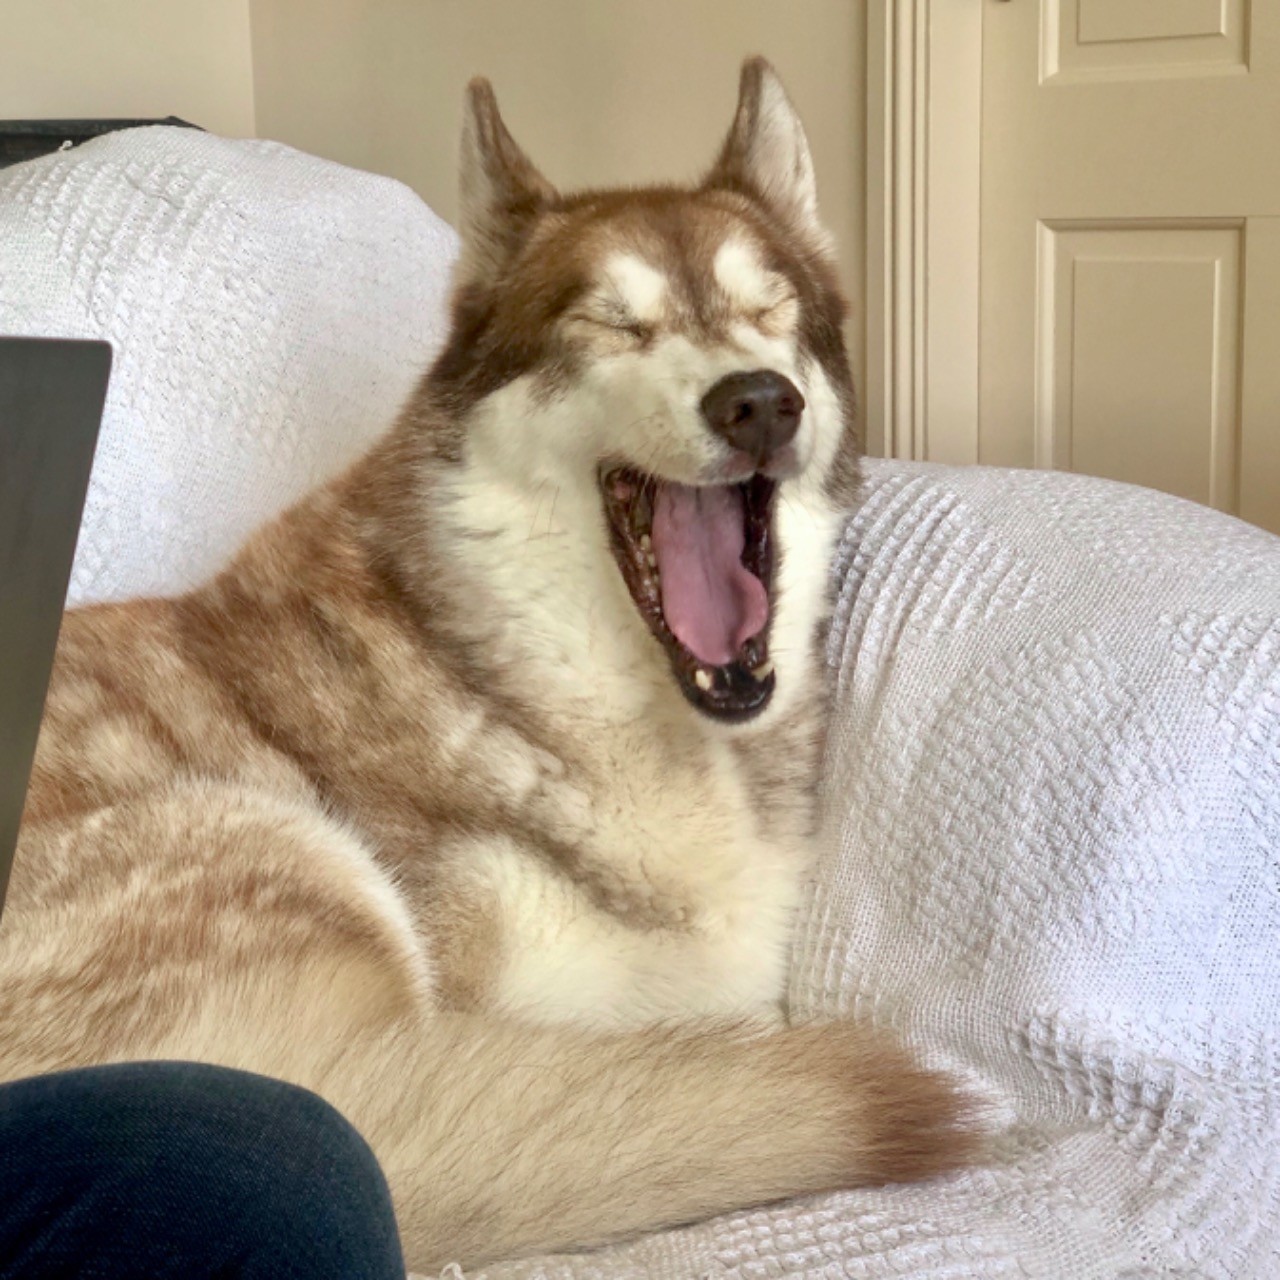 Oskar the huskamute yawning really widely.